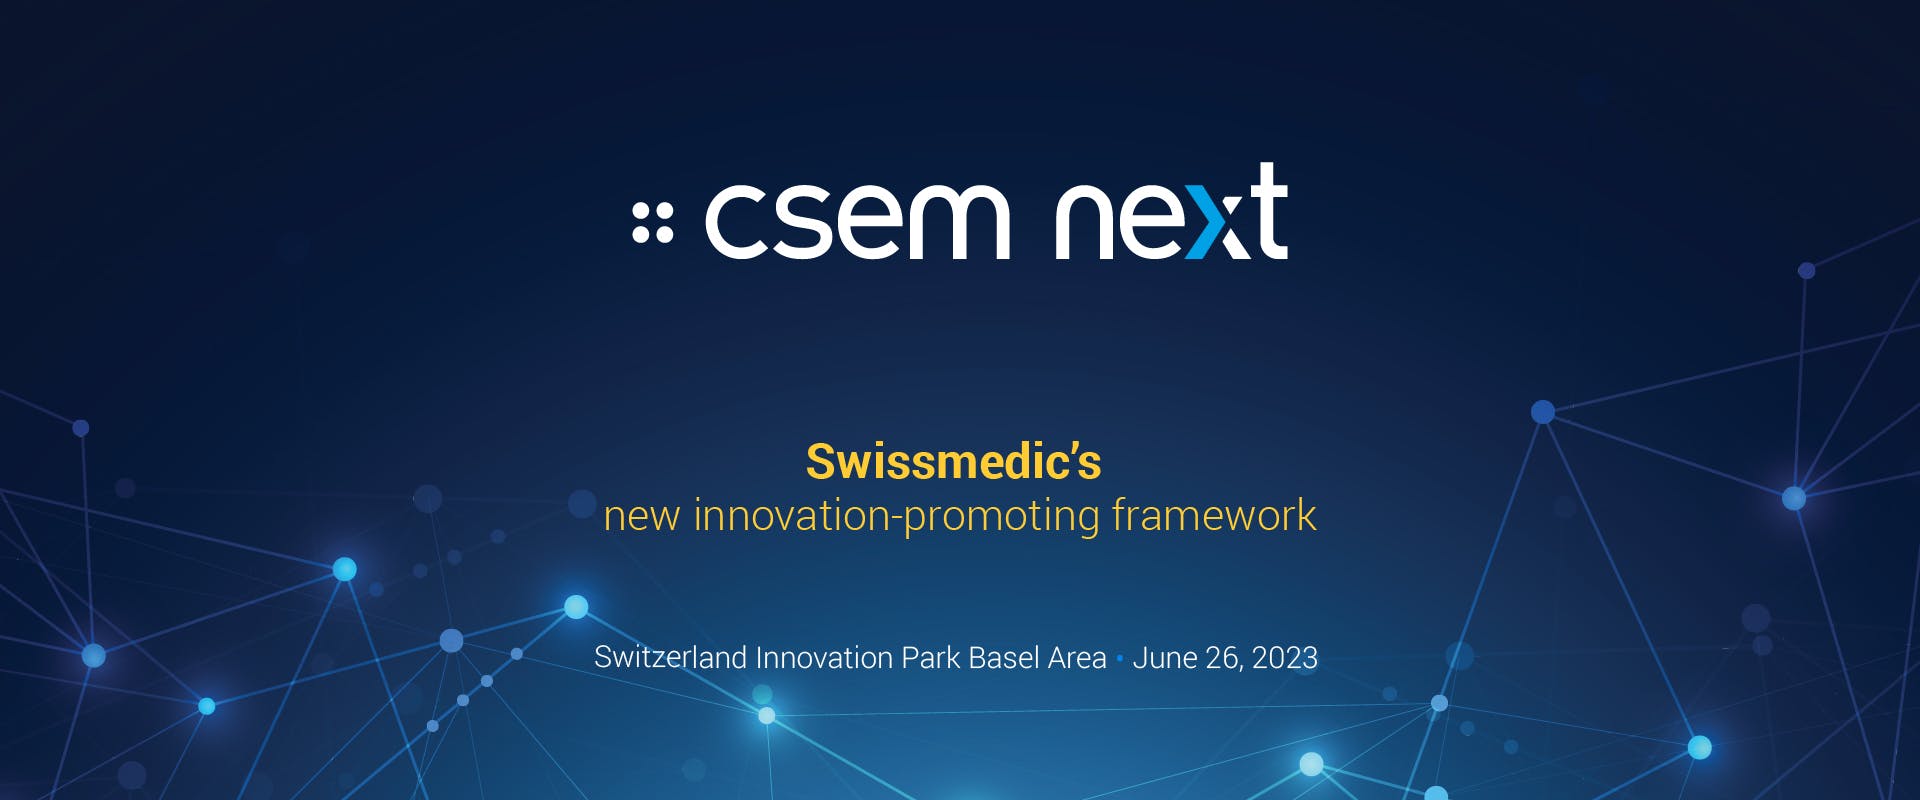 Swissmedic's new innovation-promoting framework | CSEMnext Allschwil